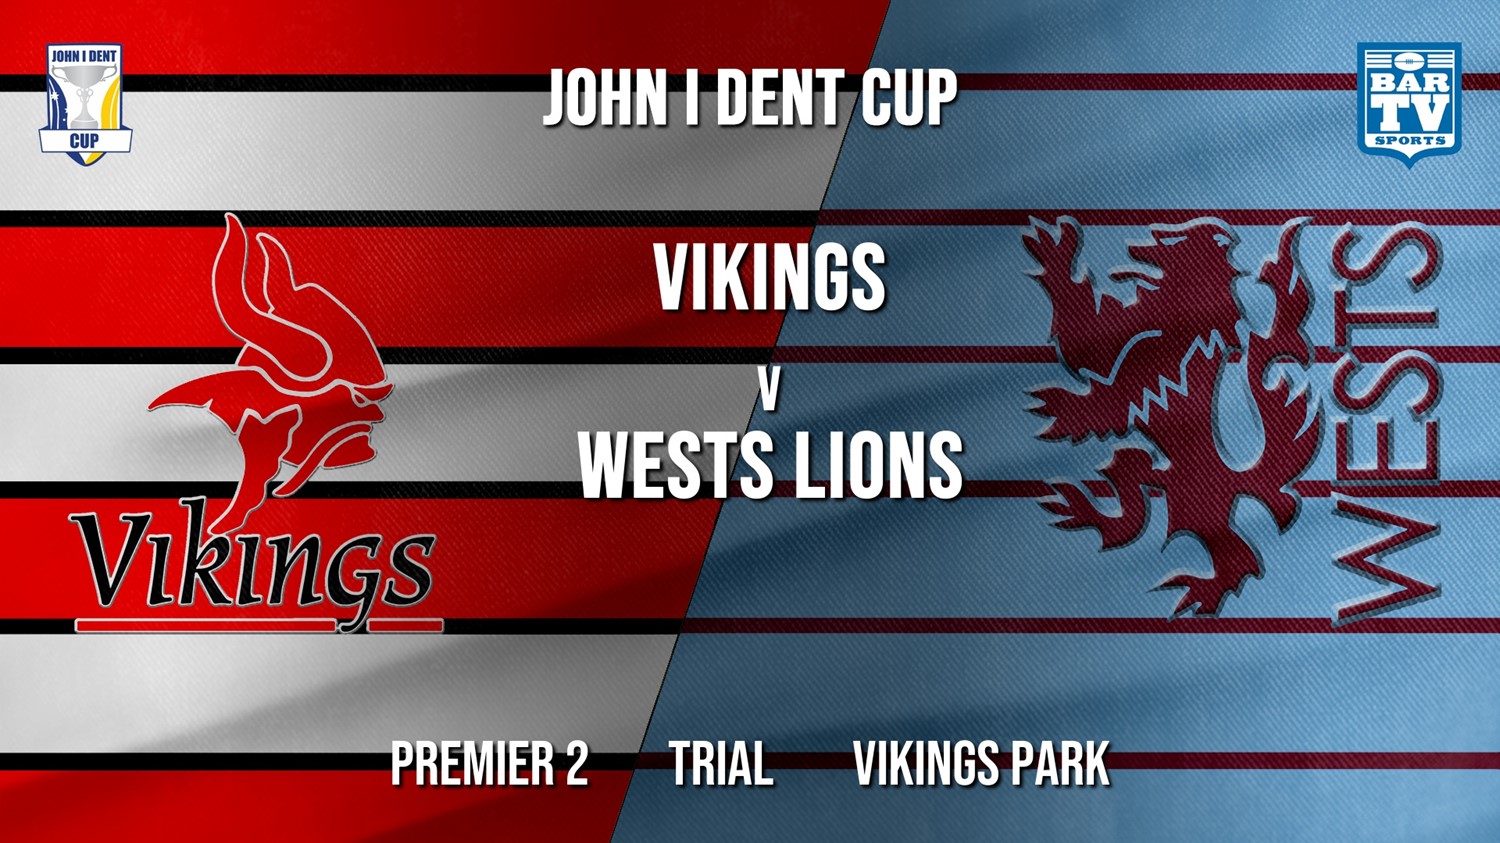 John I Dent Trial - Premier 2 - Tuggeranong Vikings v Wests Lions Slate Image